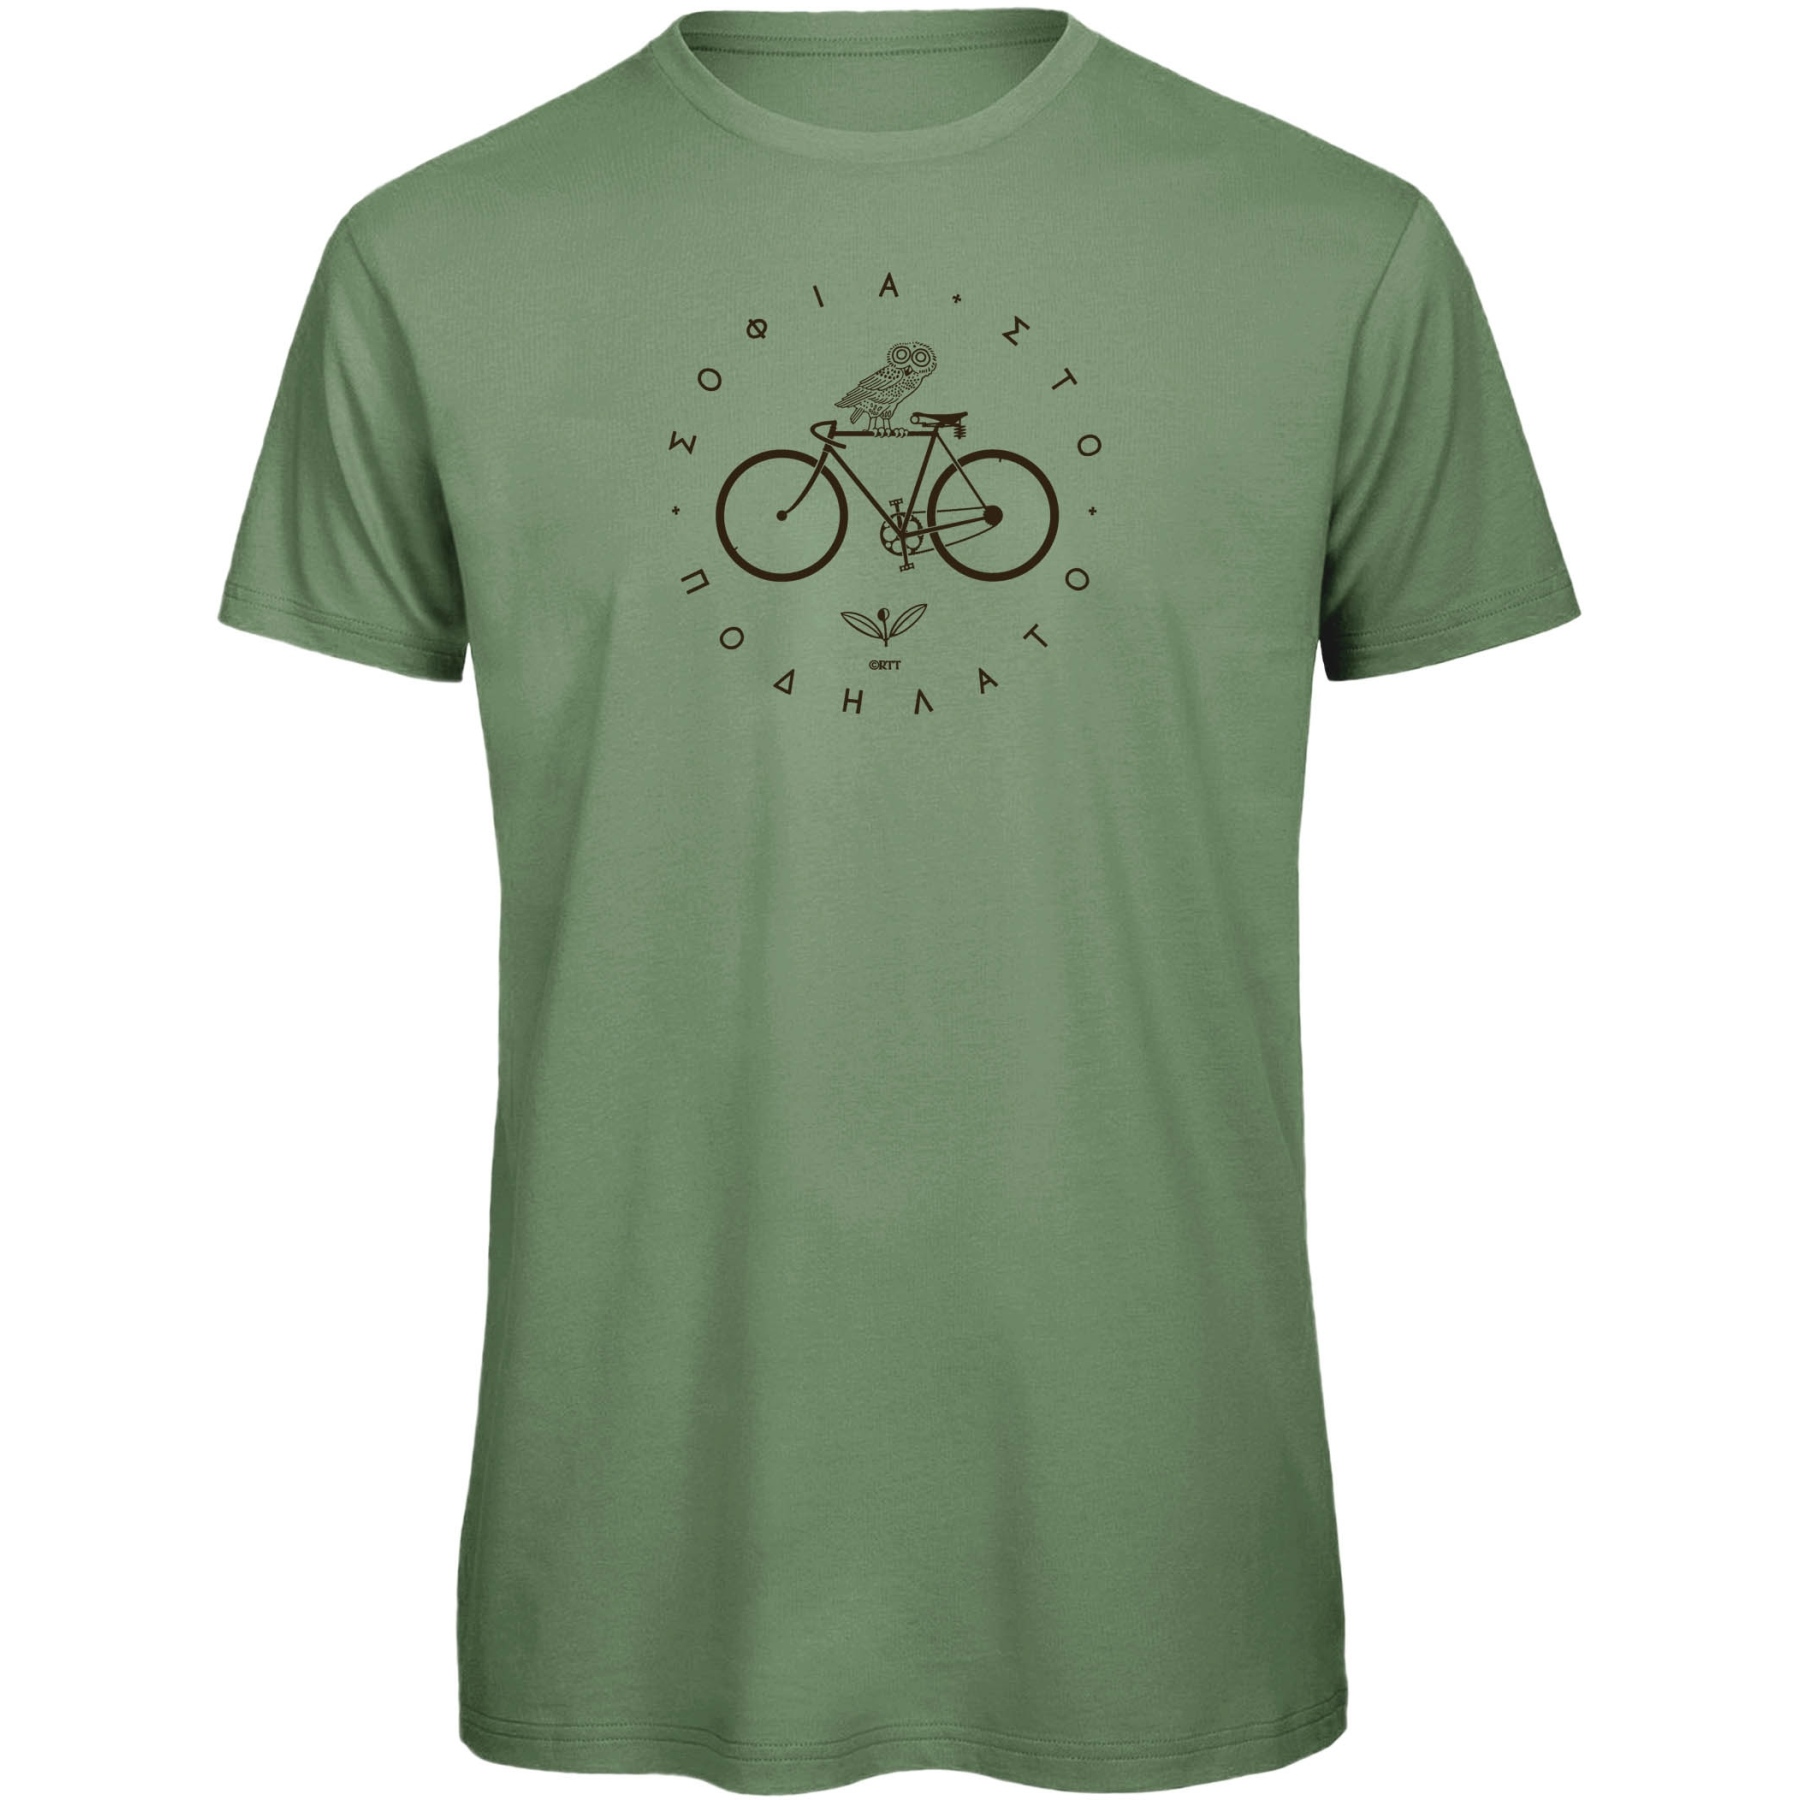 Imagen de RTTshirts Camiseta Bicicleta - Minerva - verde claro